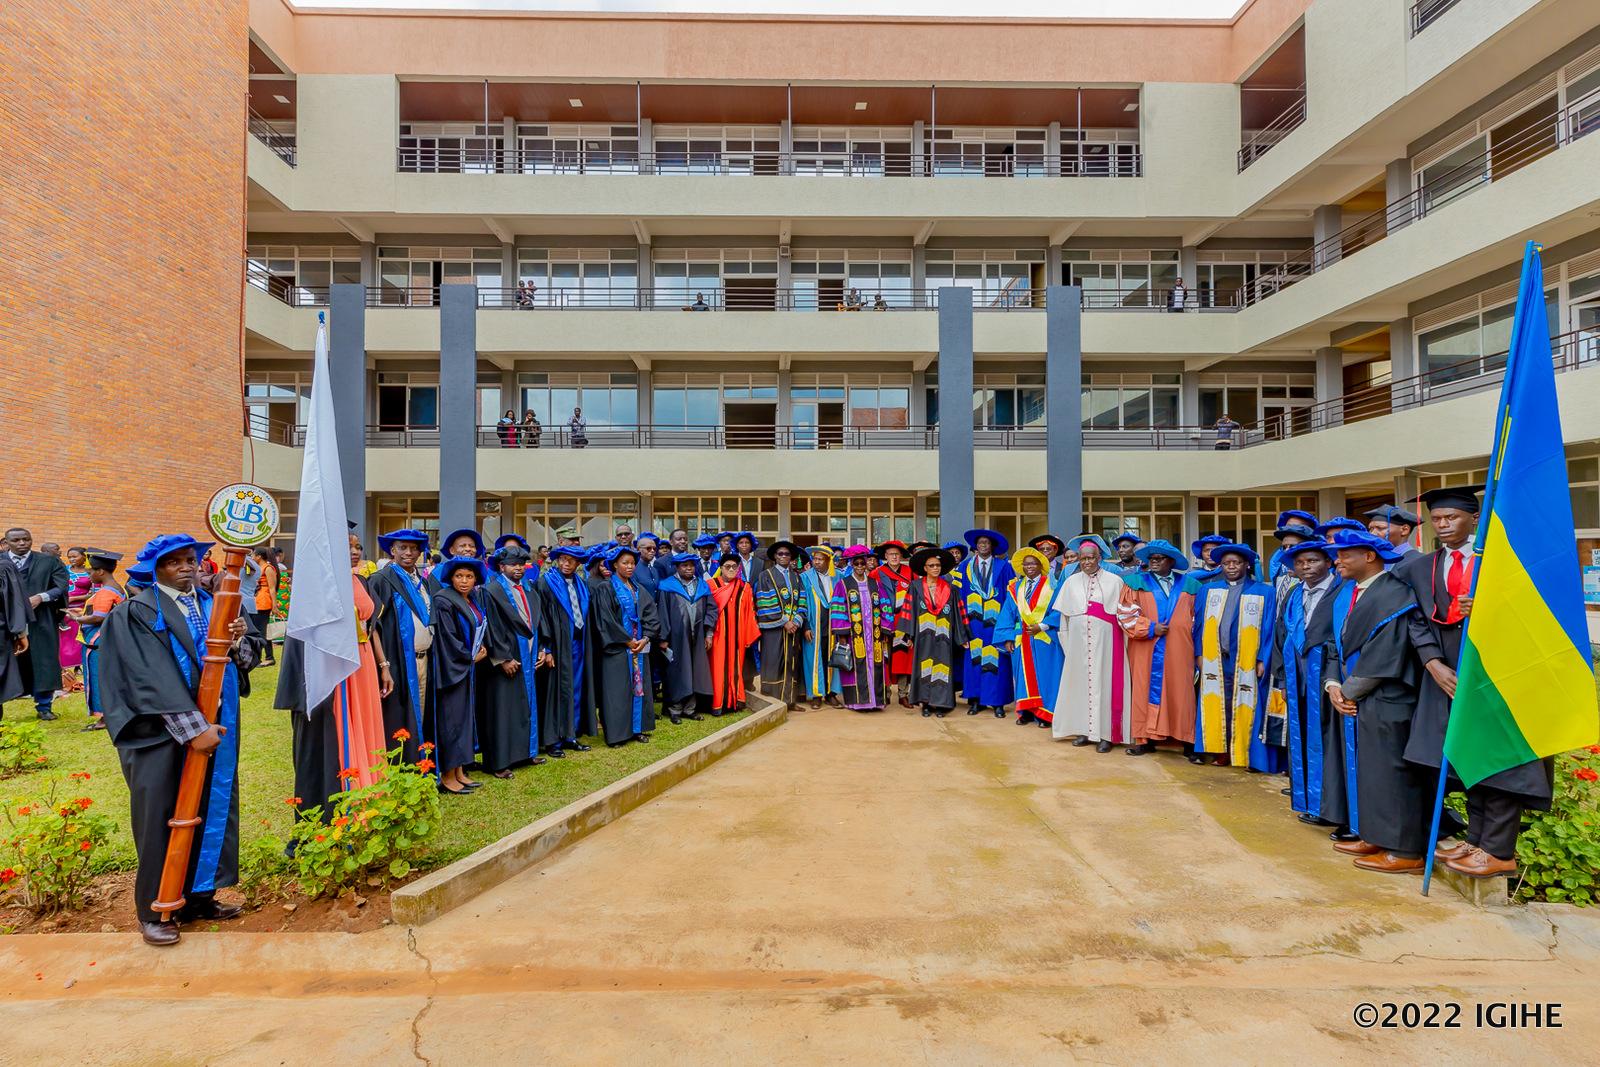 11th Graduation Ceremony at University of Technology and Arts of Byumba (UTAB)